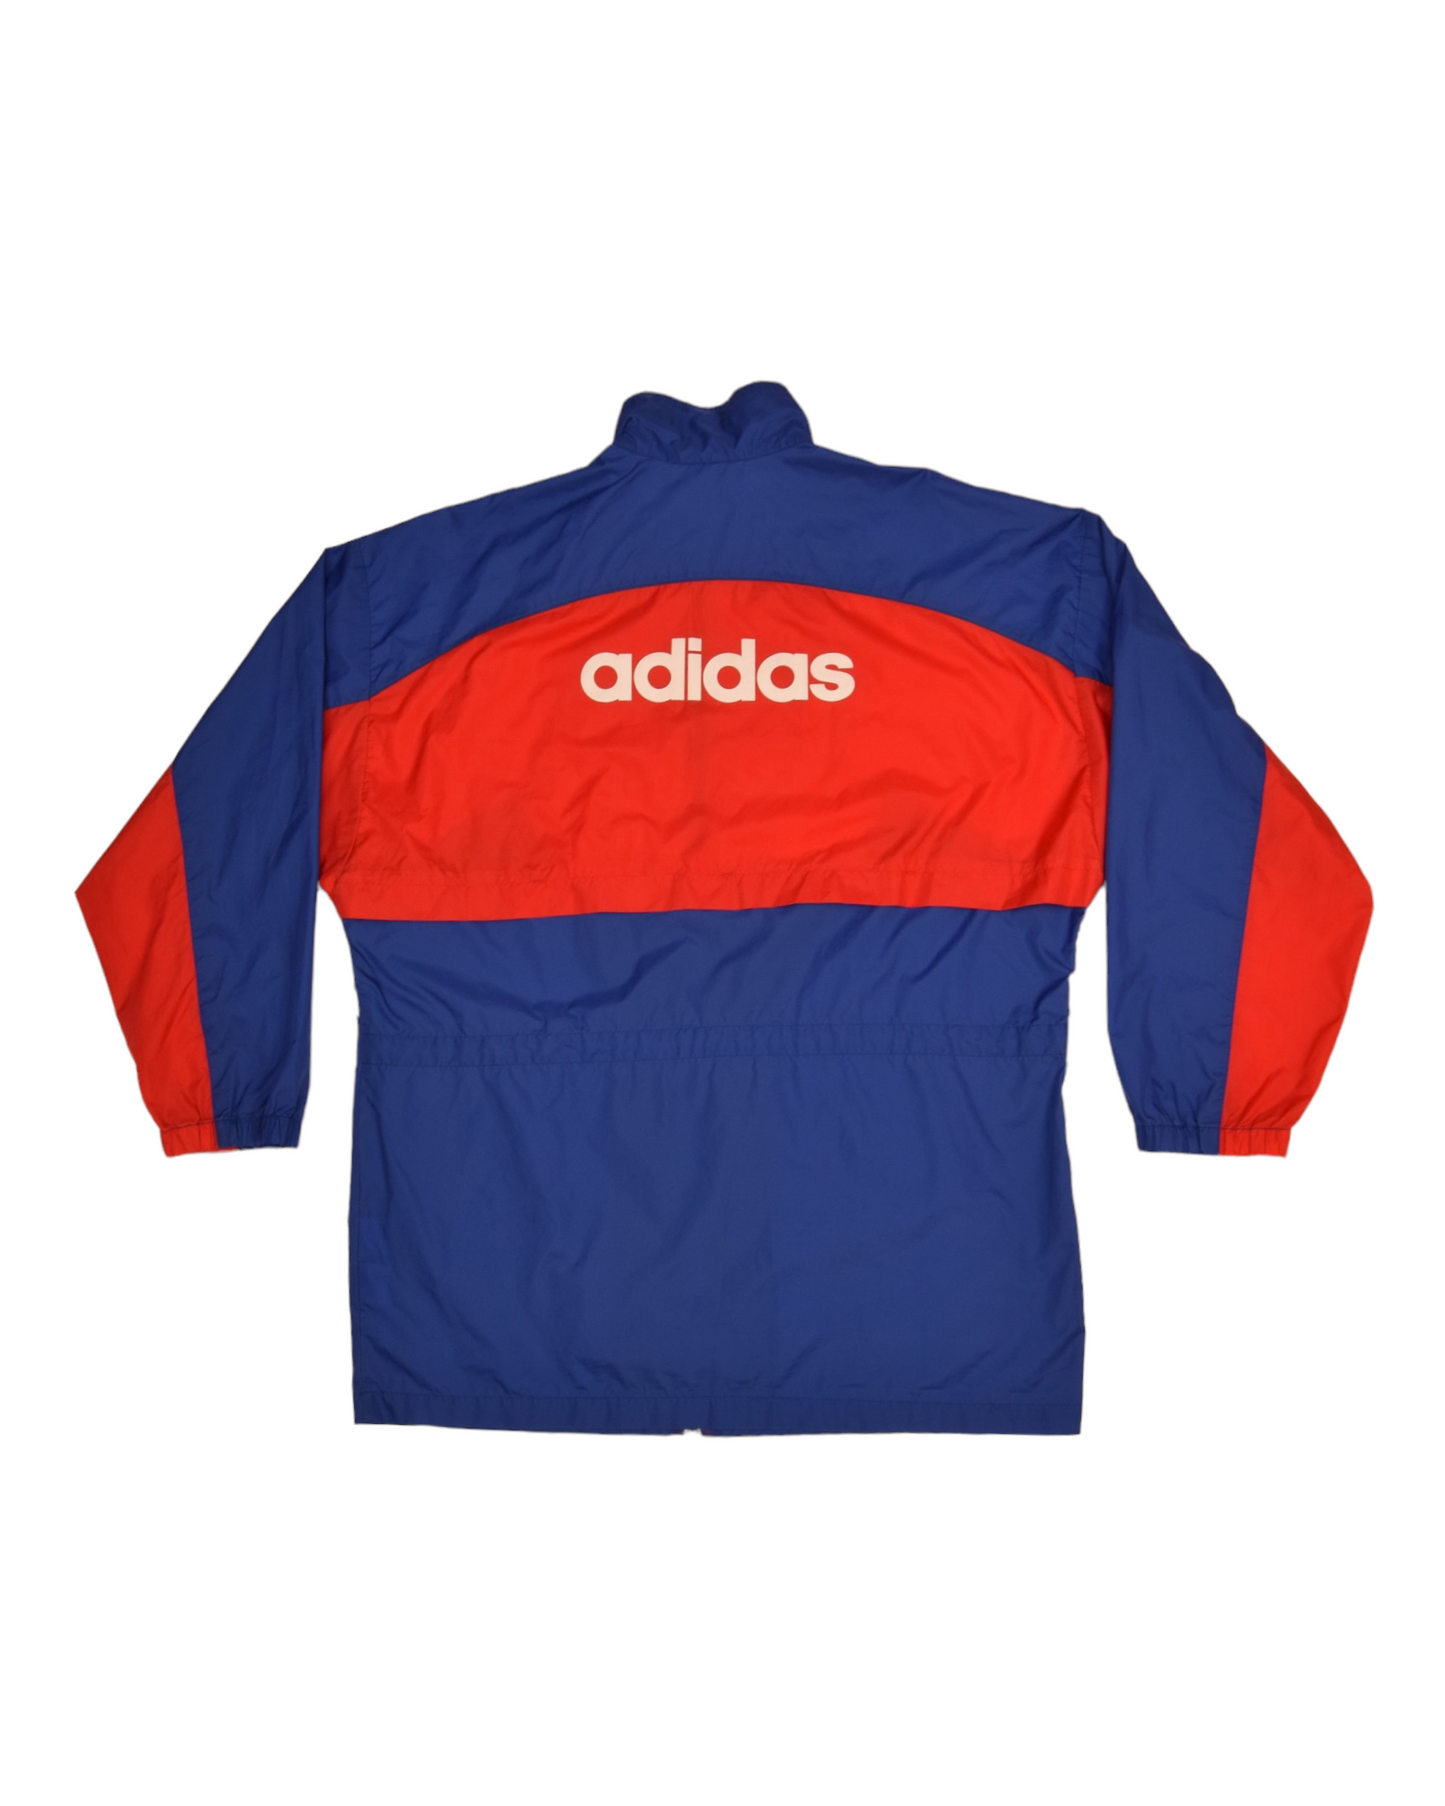 Vintage Bayern München Adidas 1993 1994 1995 Windbreaker Size M-L